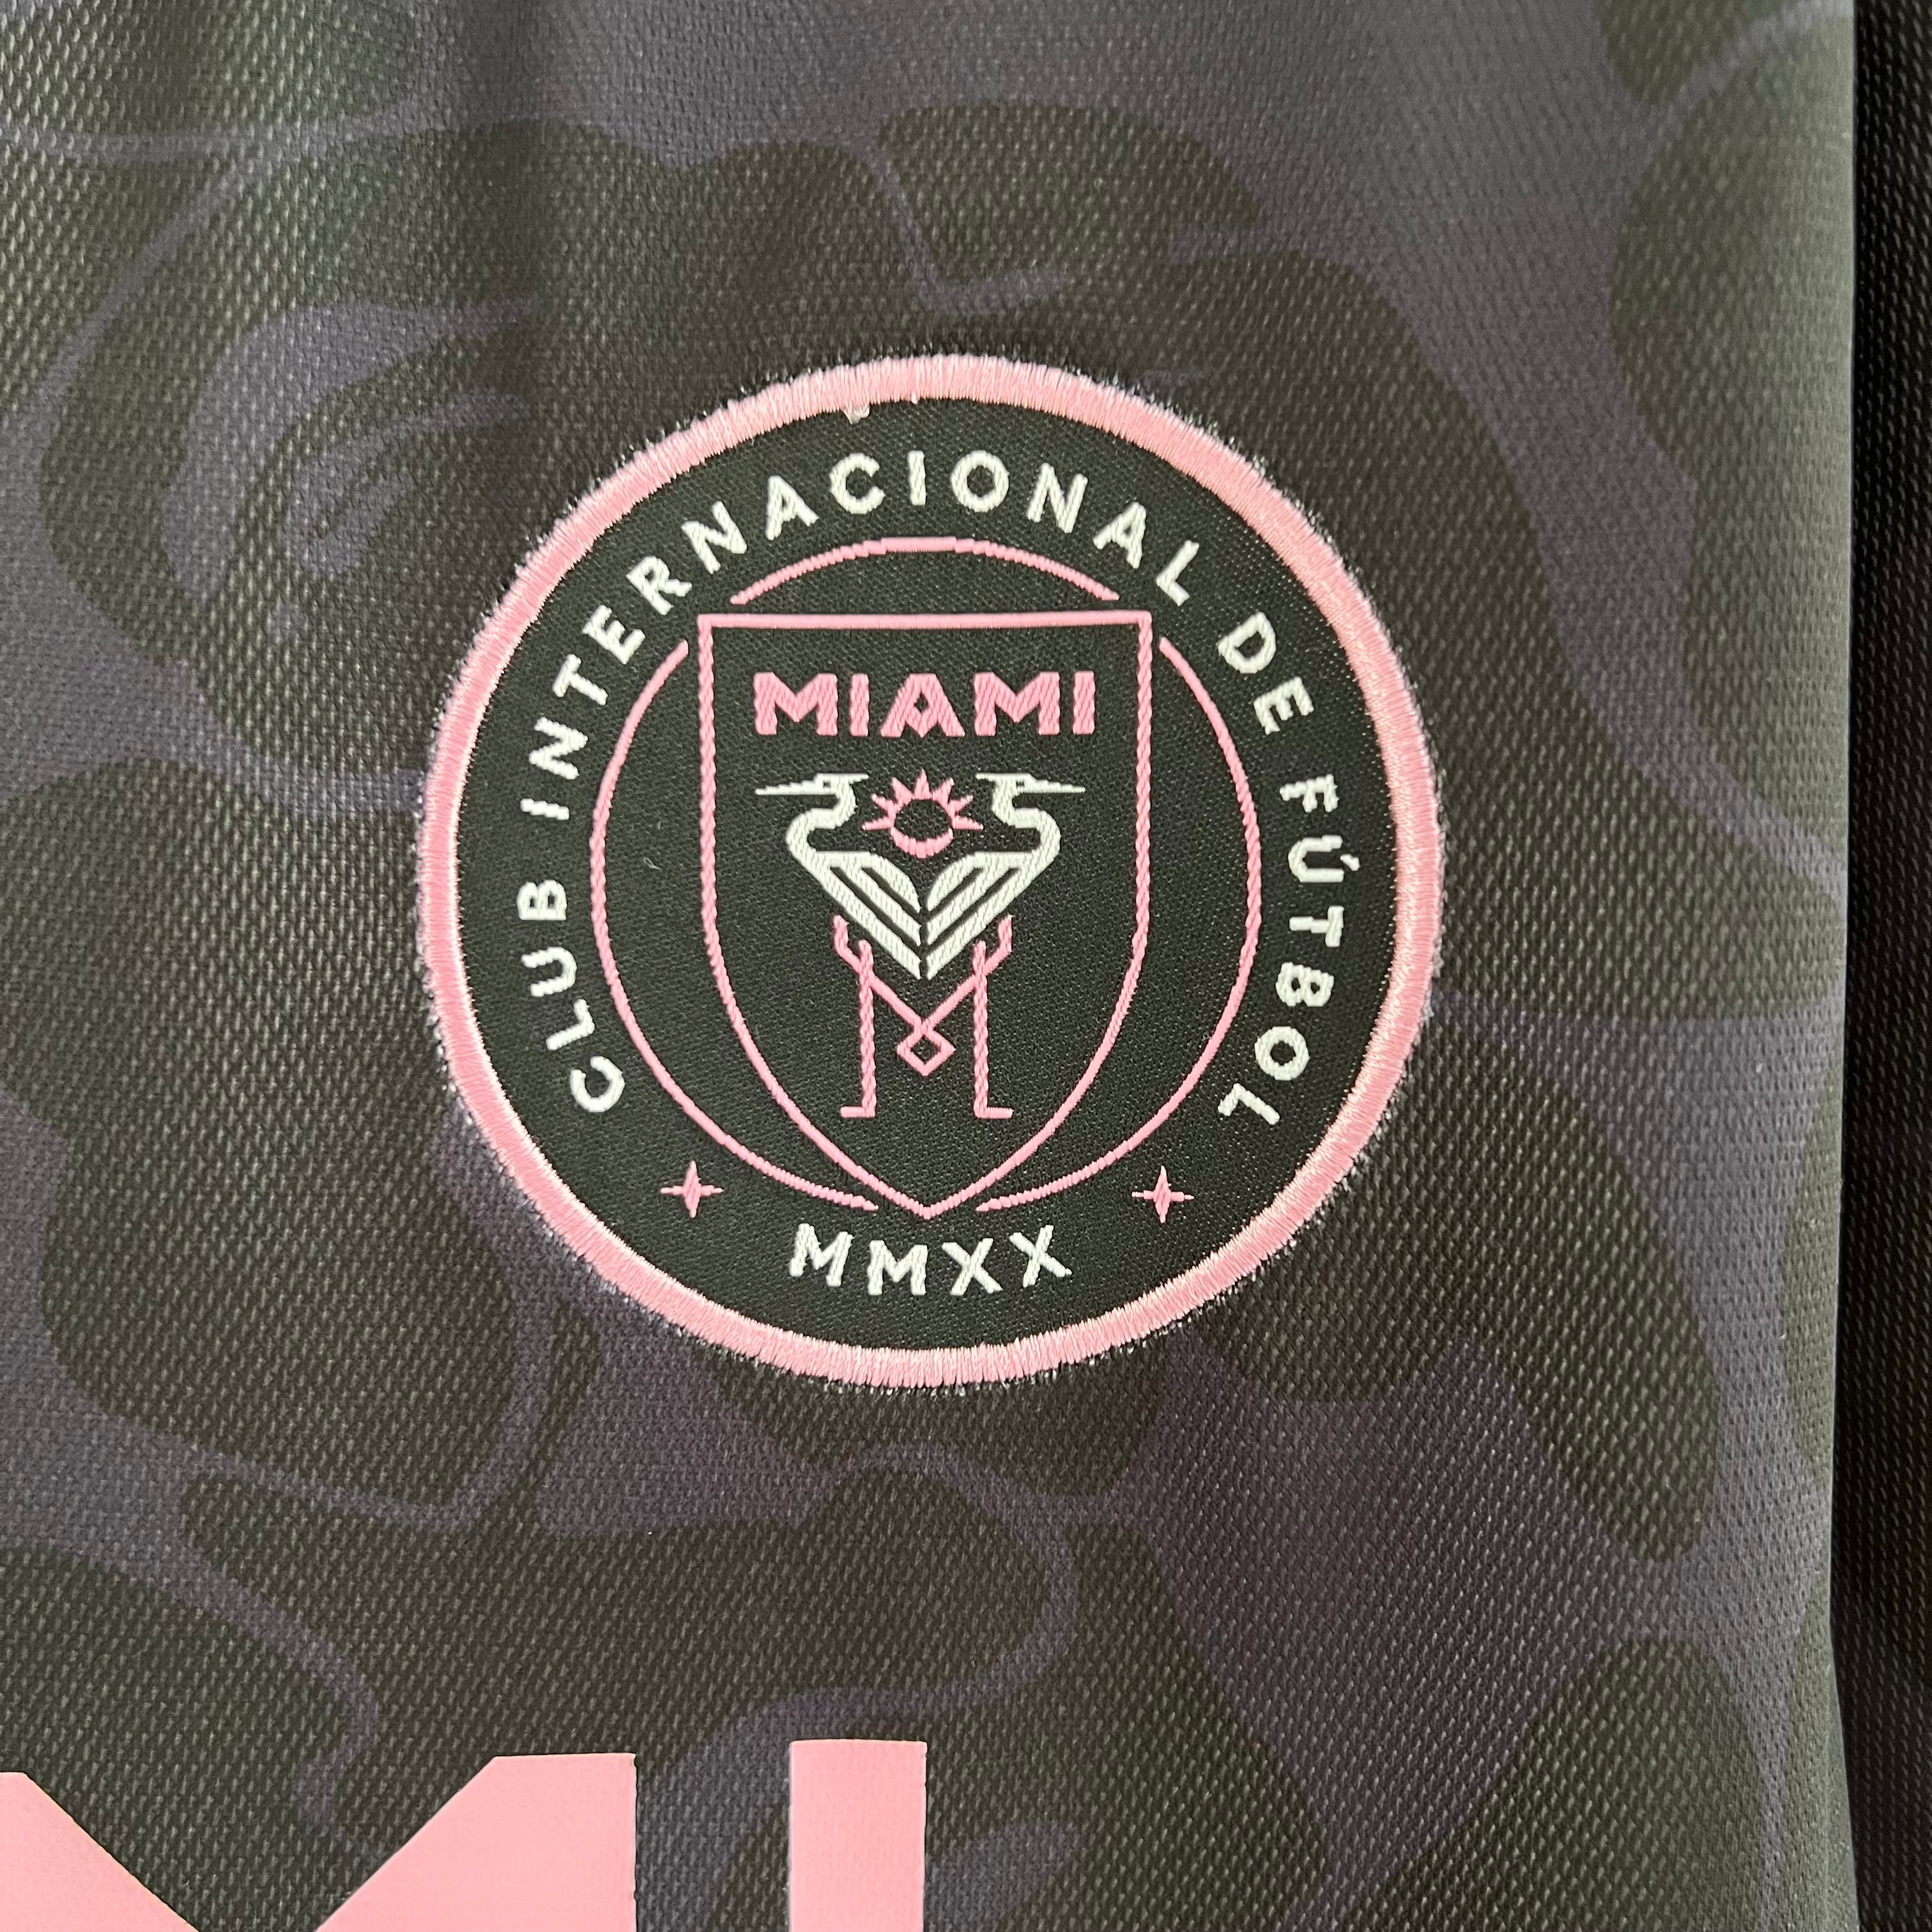 Inter Miami x A BATHING APE Away Kit